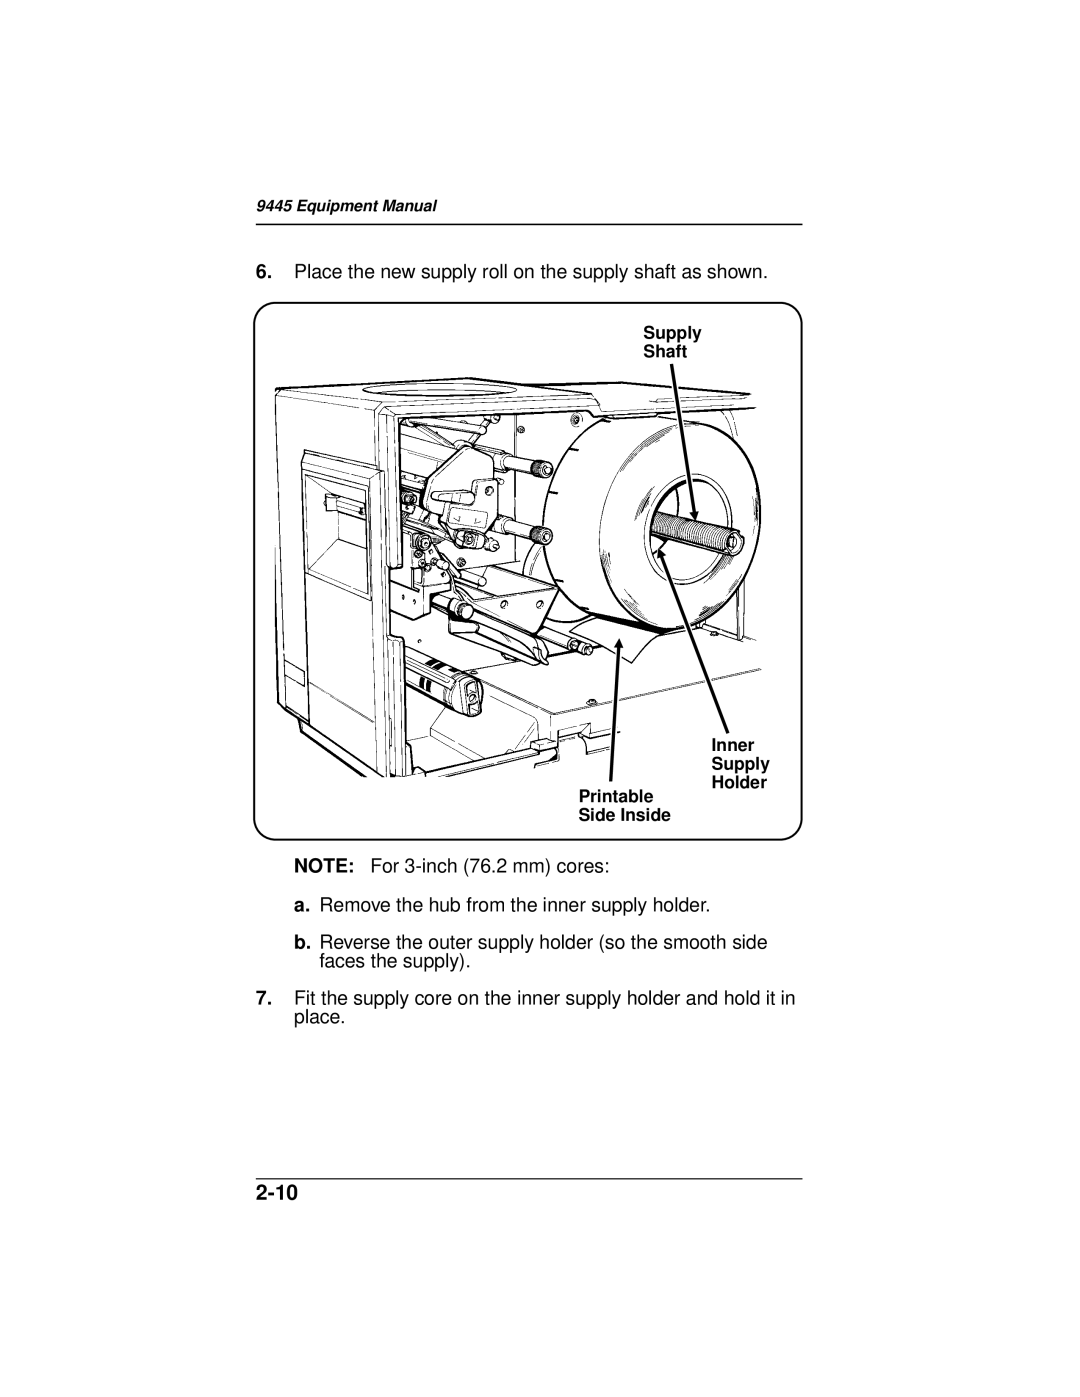 Paxar 9445 manual 2-10, Supply Shaft, Printable Side Inside, Inner Supply Holder, Equipment Manual 